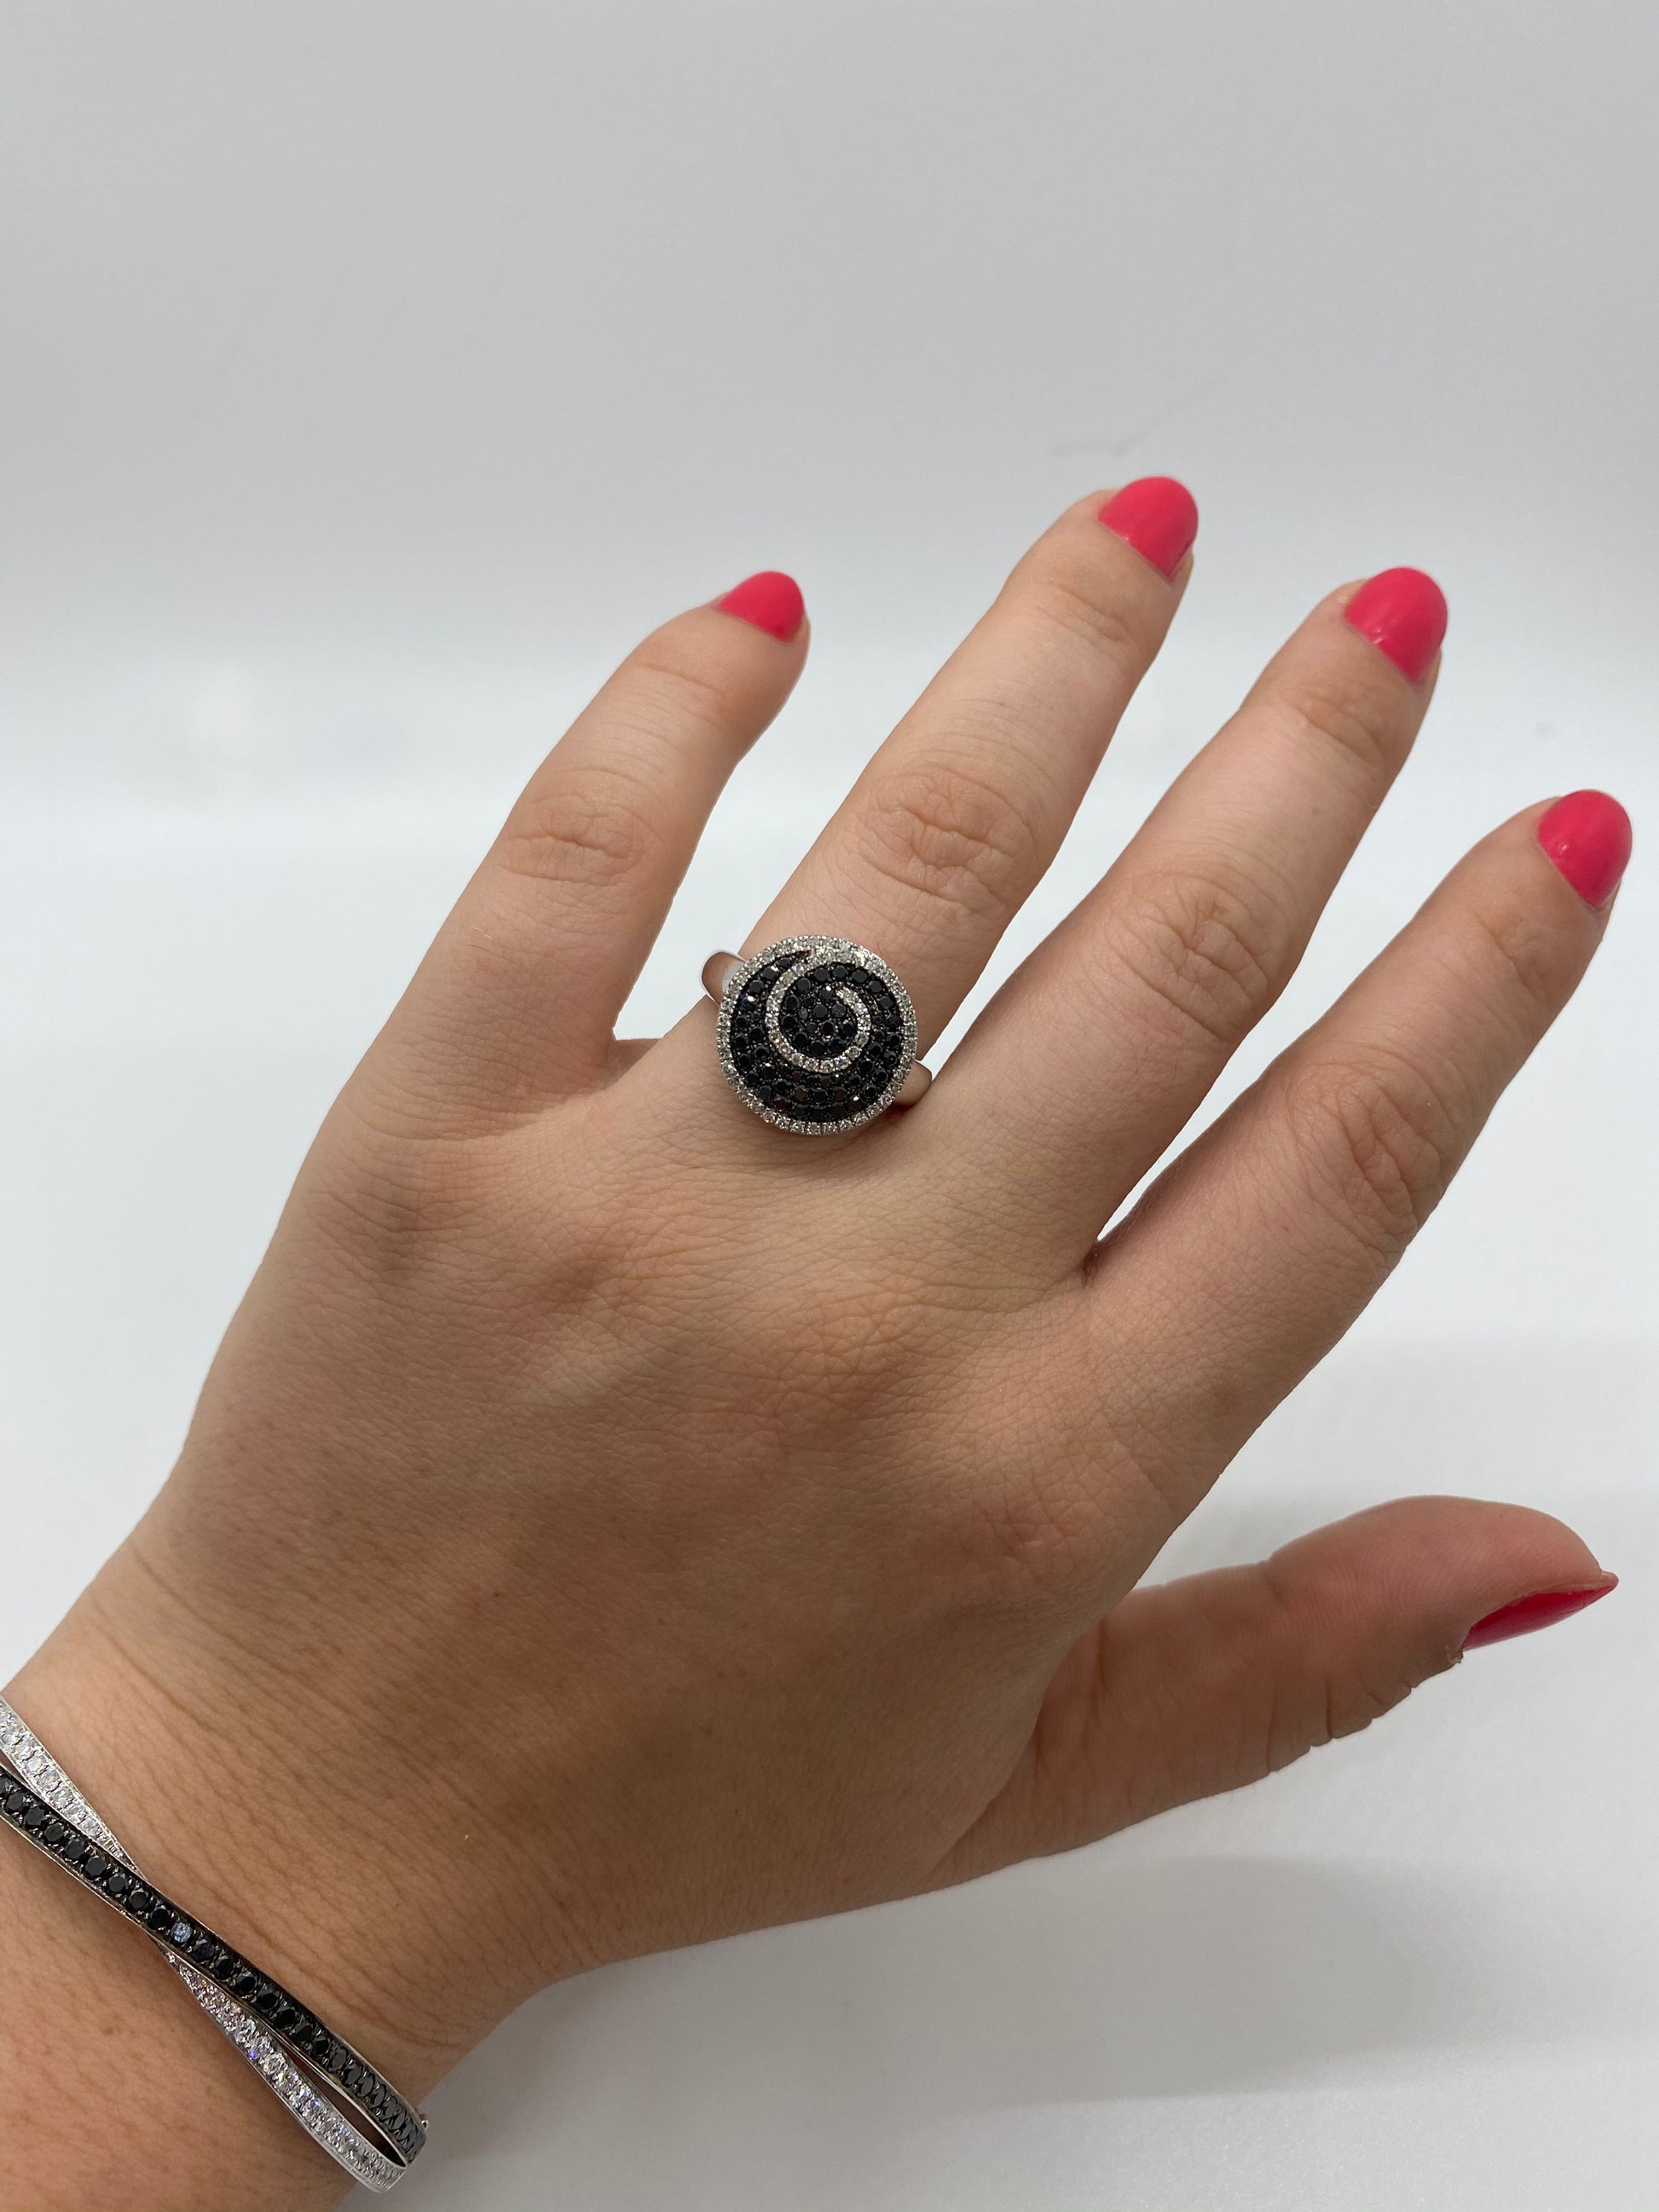 Black Diamond Ring R13395 - Royal Gems and Jewelry